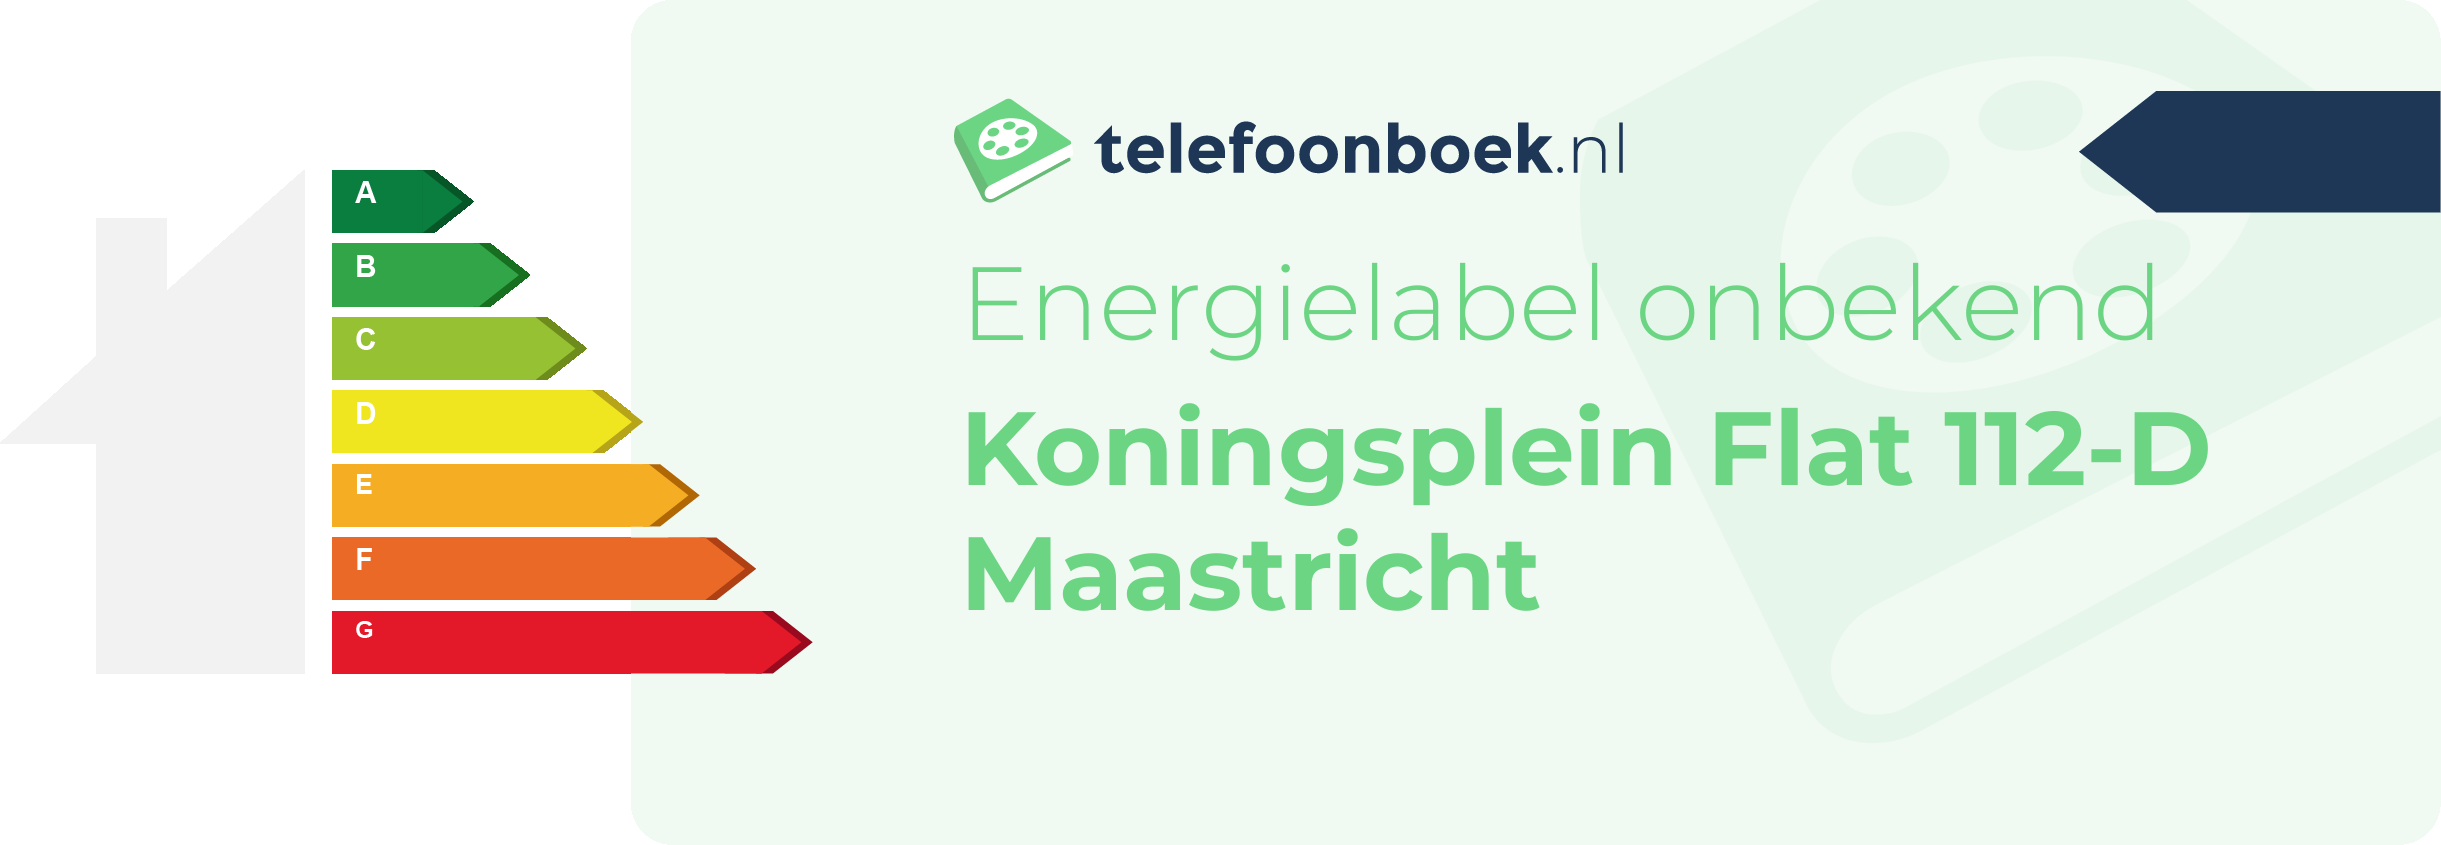 Energielabel Koningsplein Flat 112-D Maastricht